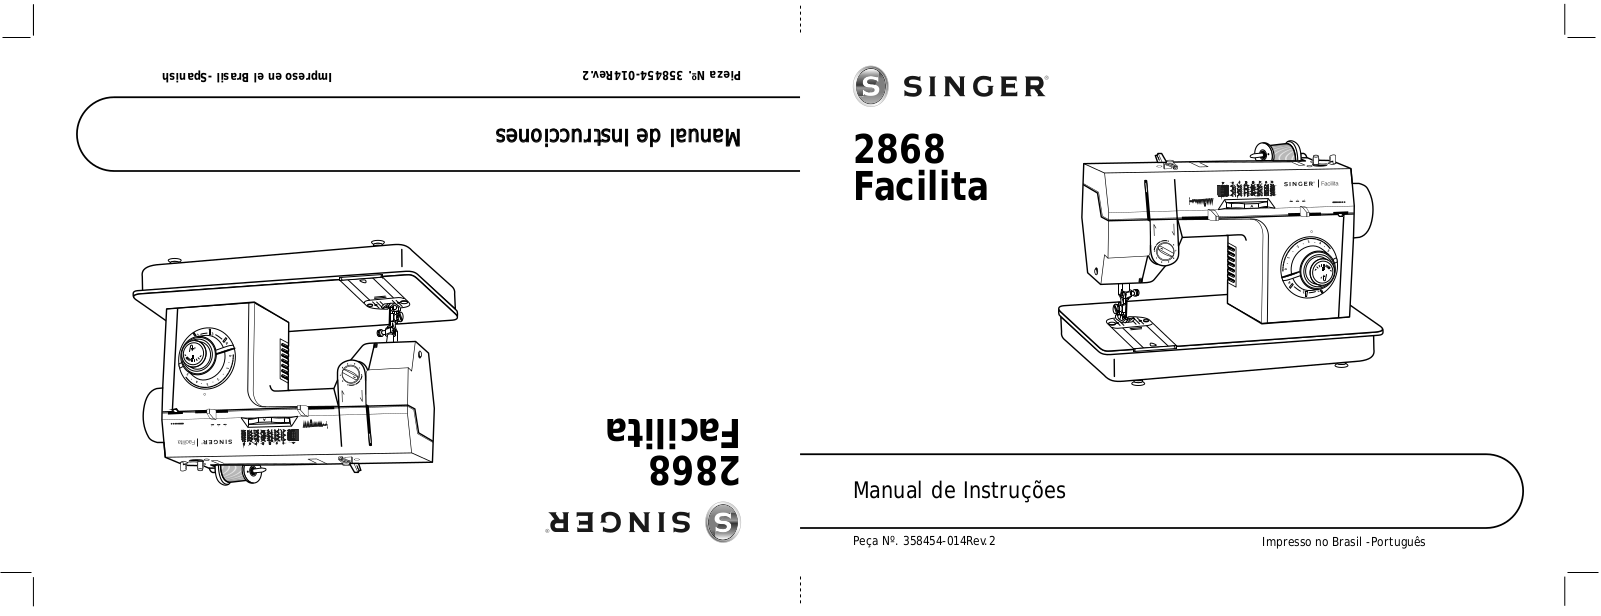 Singer FACILITA 2868 Manual